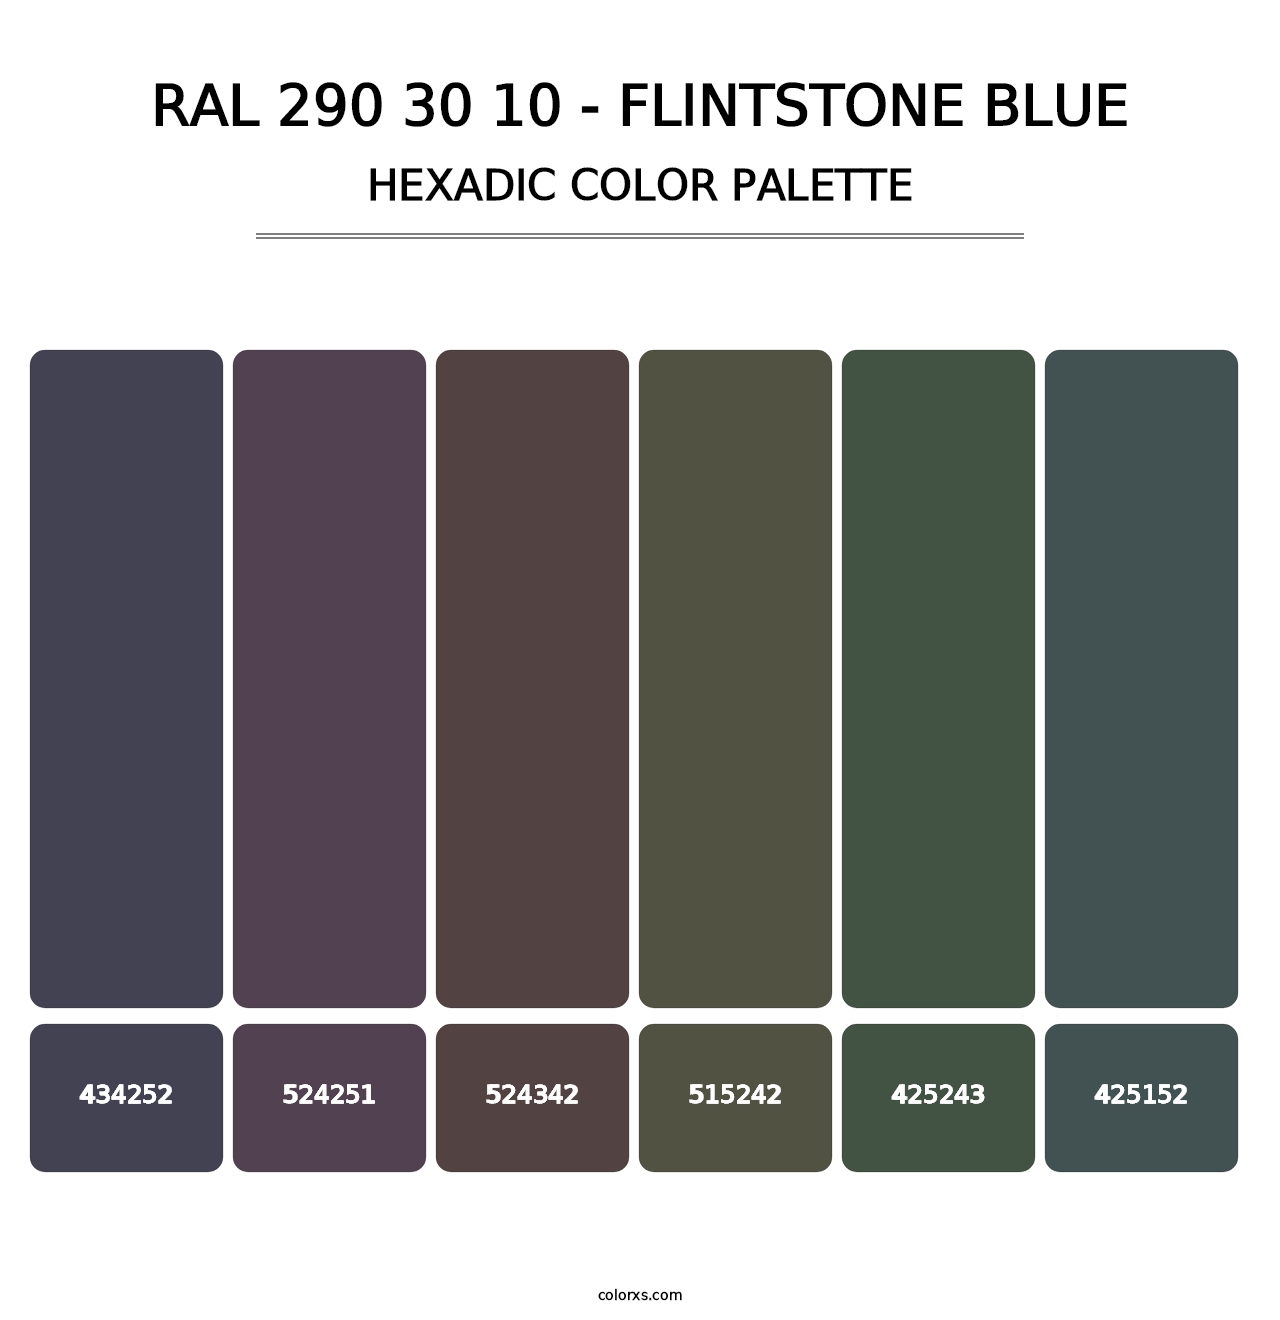 RAL 290 30 10 - Flintstone Blue - Hexadic Color Palette